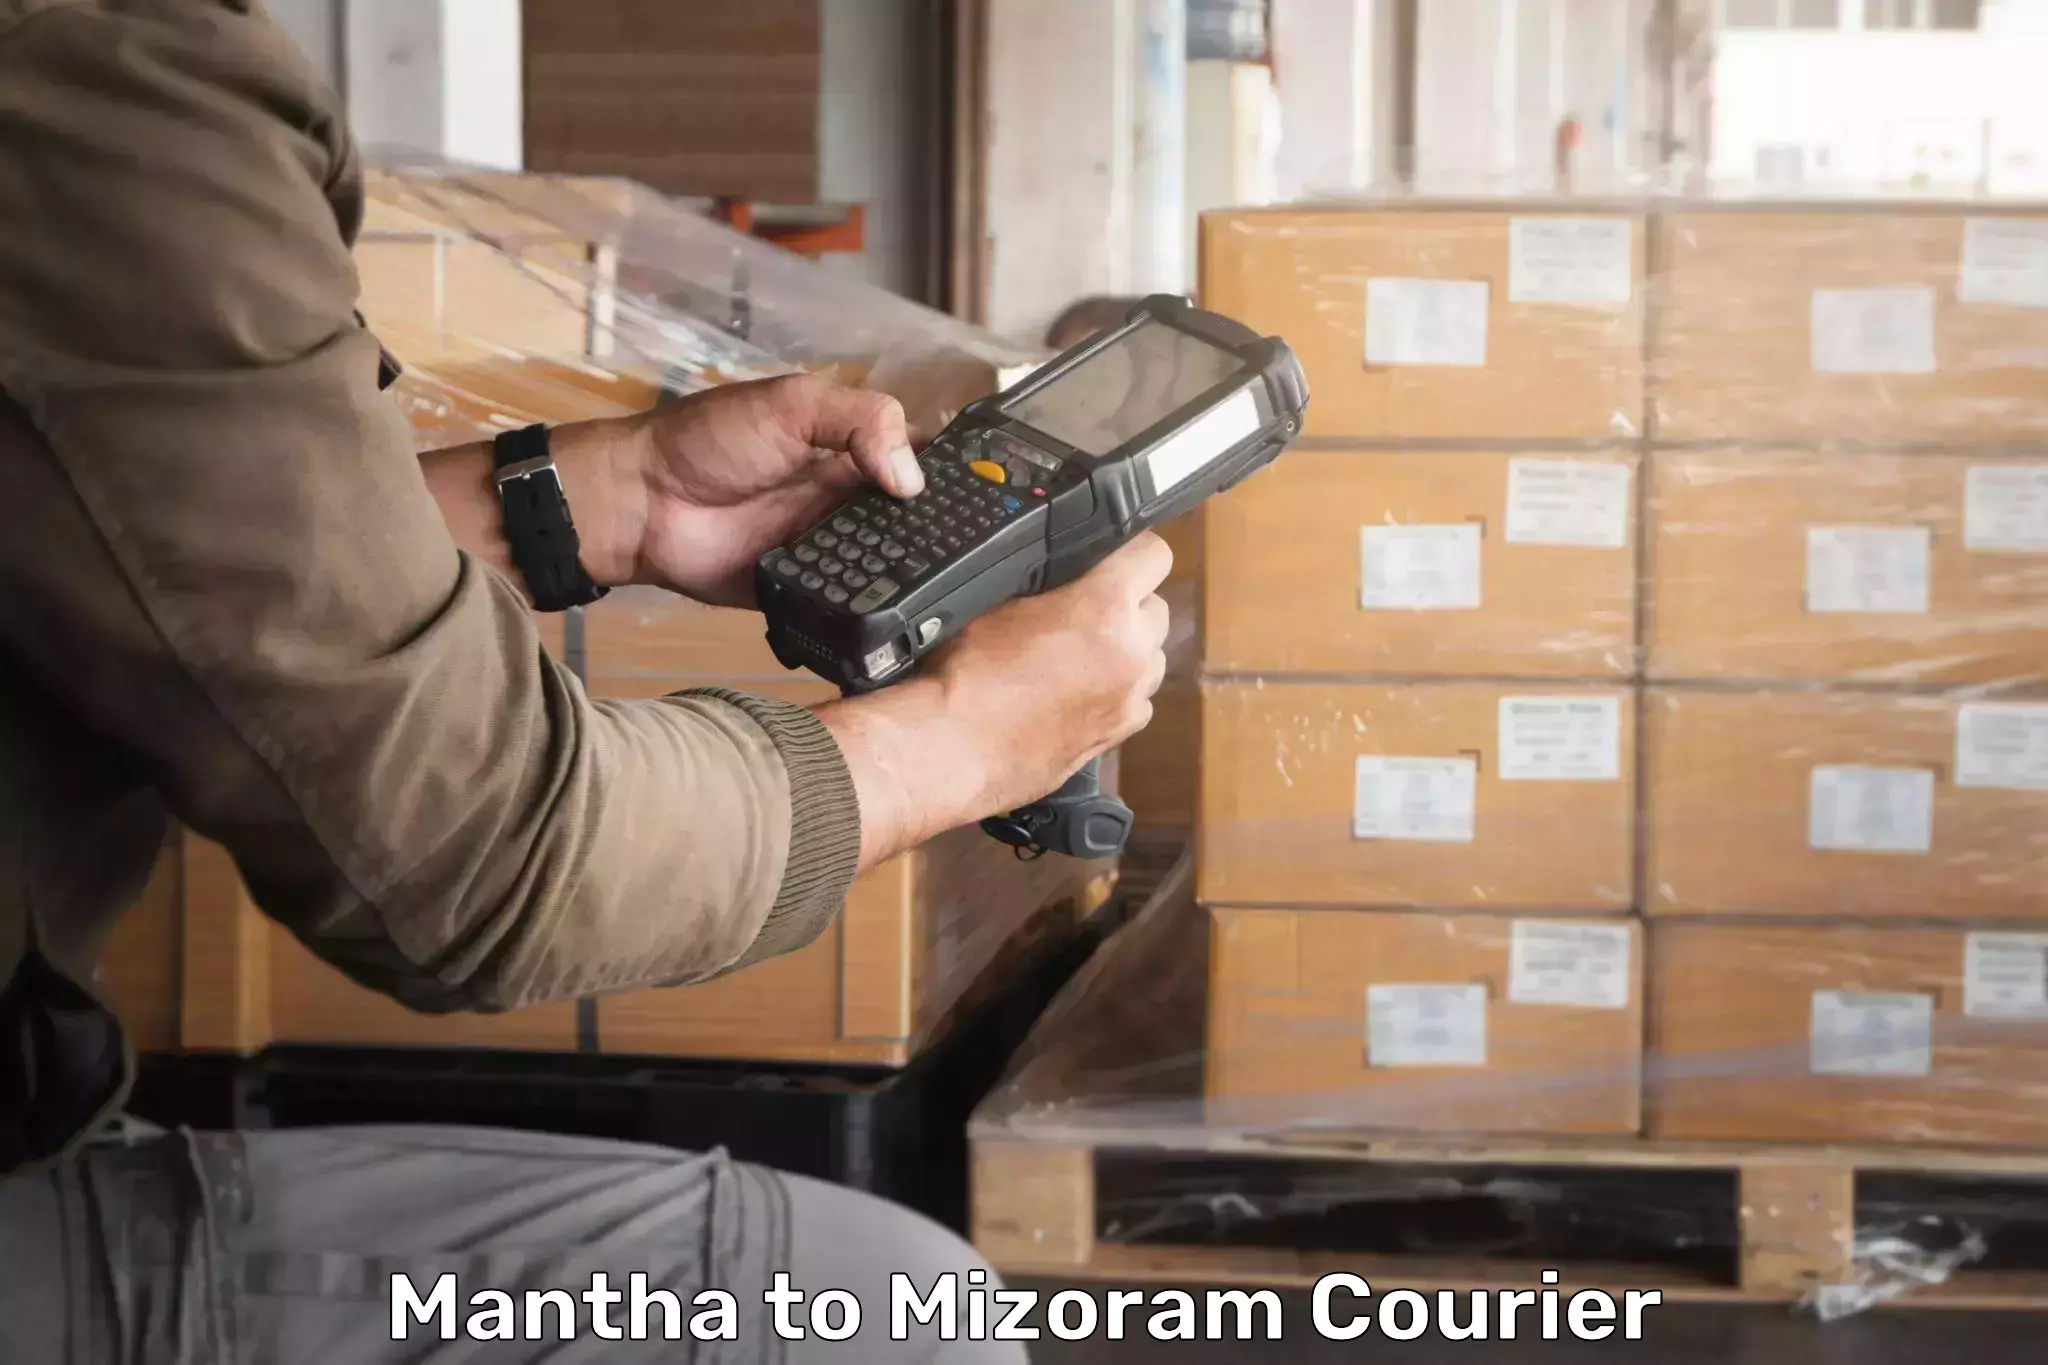 Tracking updates Mantha to Mizoram